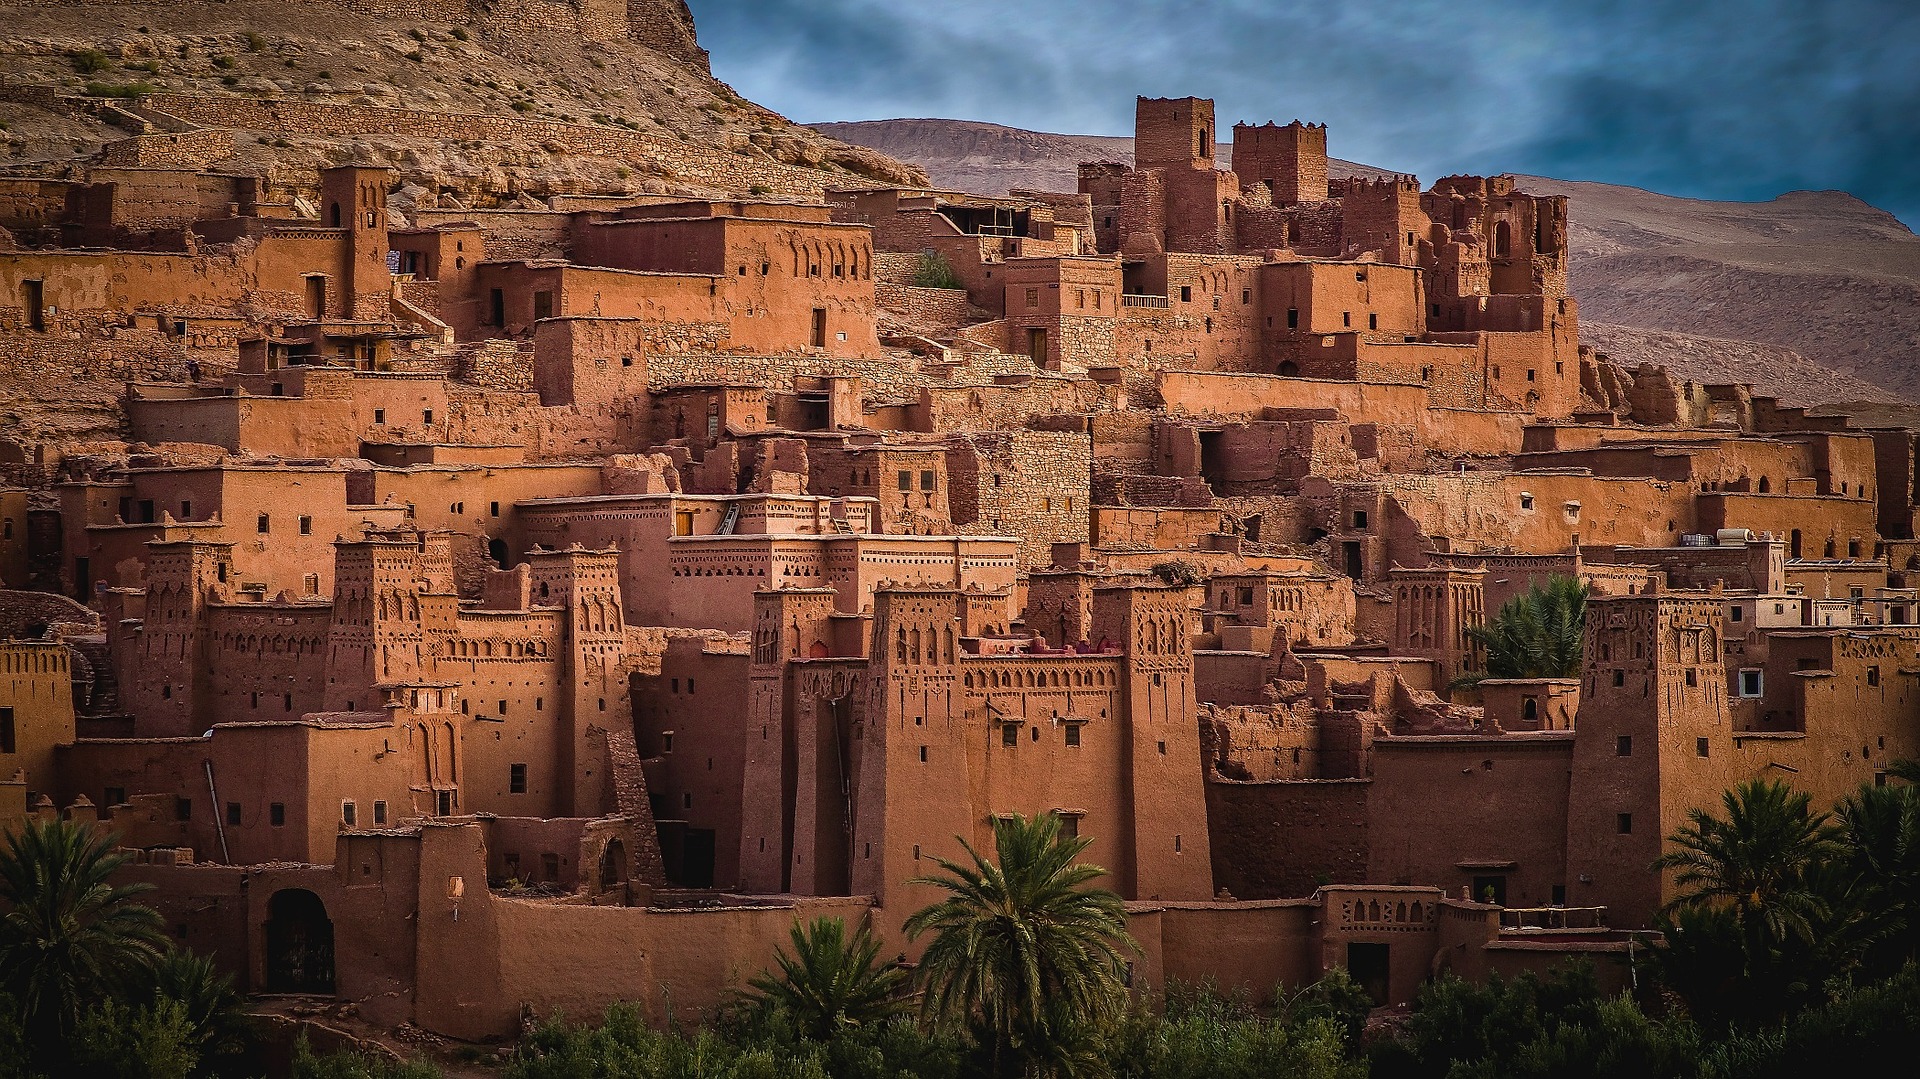 Day 04: Marrakech - Ait Ben Haddou - Ouarzazate